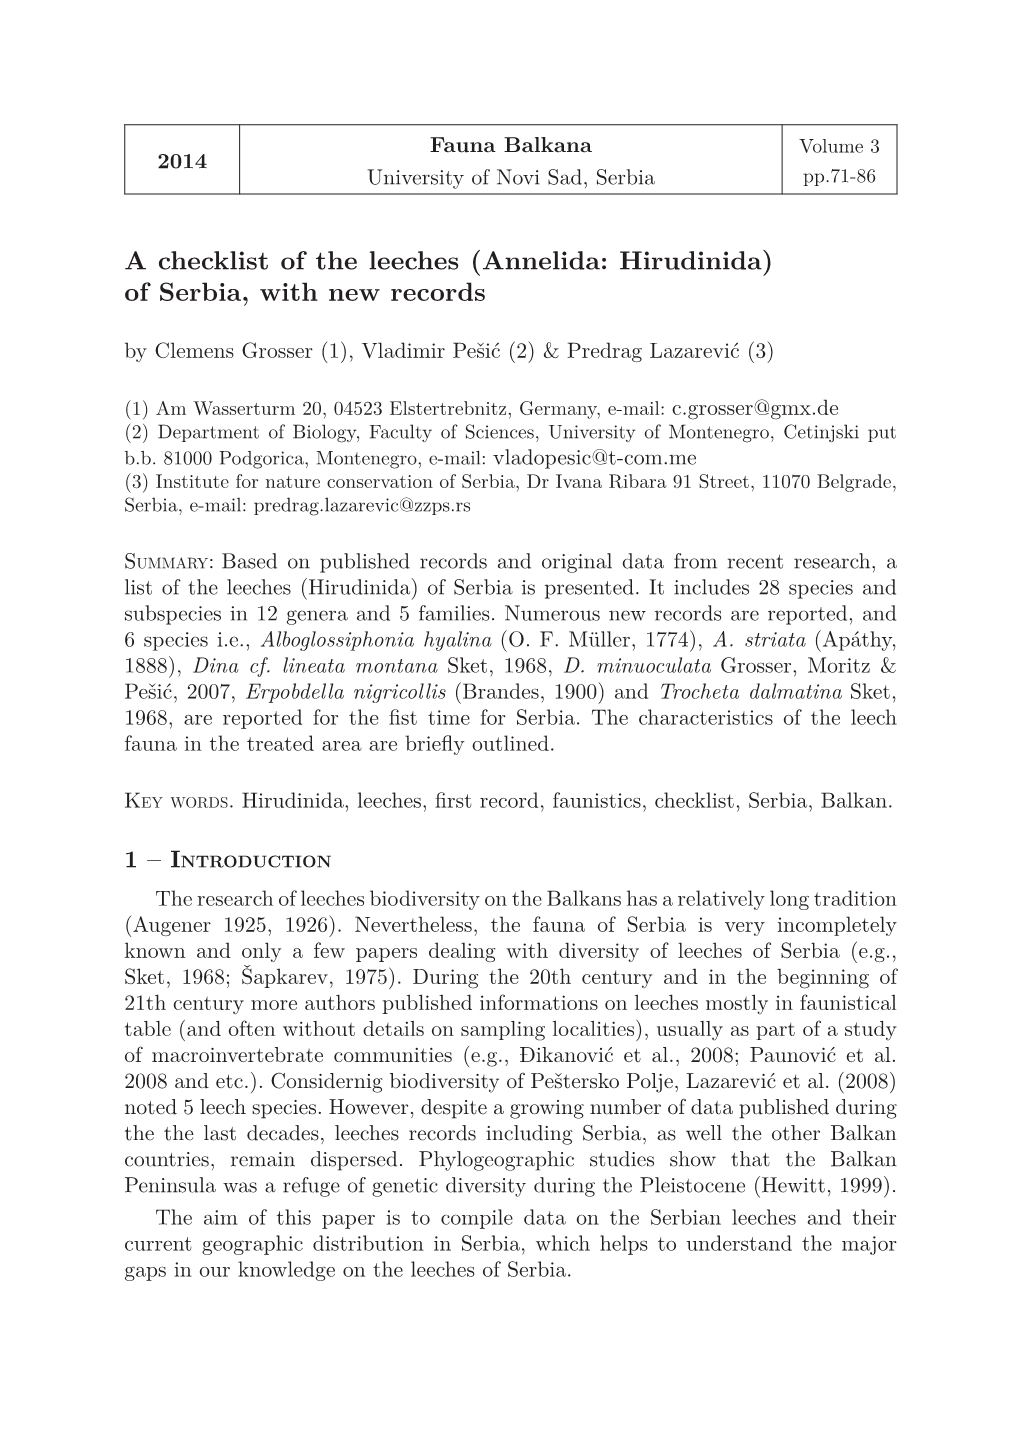 A Checklist of the Leeches (Annelida: Hirudinida) of Serbia, with New Records by Clemens Grosser (1), Vladimir Pešić (2) & Predrag Lazarević (3)